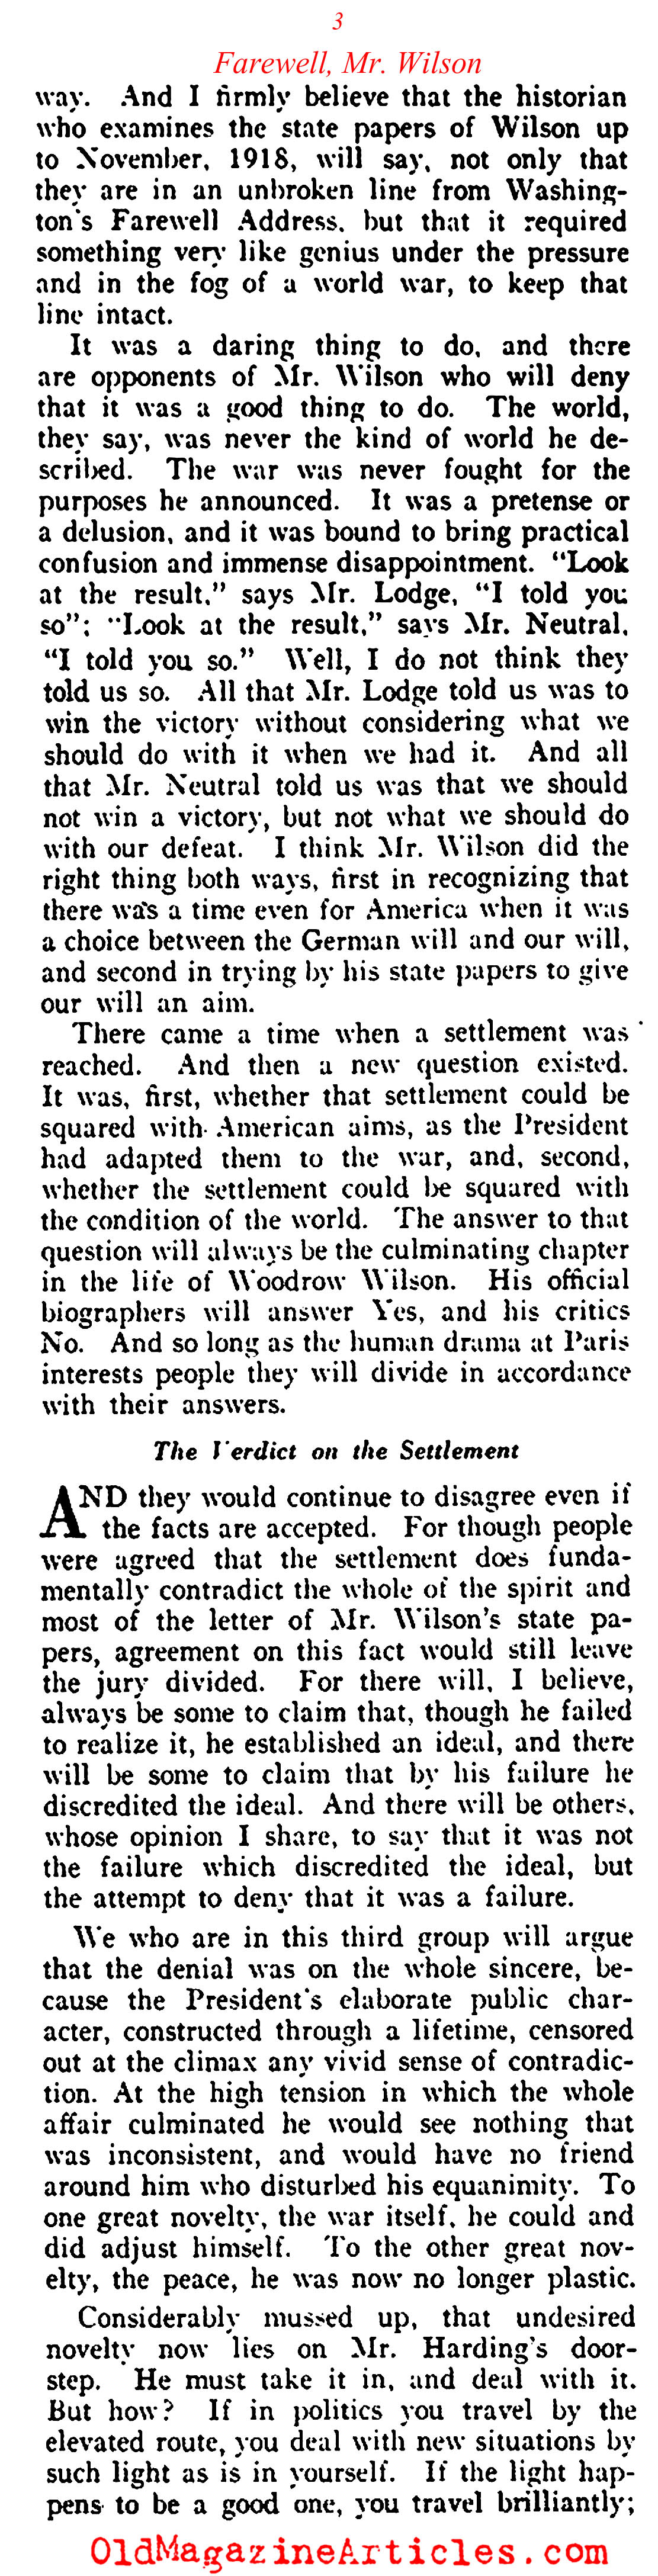 Farewell Woodrow Wilson (Vanity Fair Magazine, 1921)